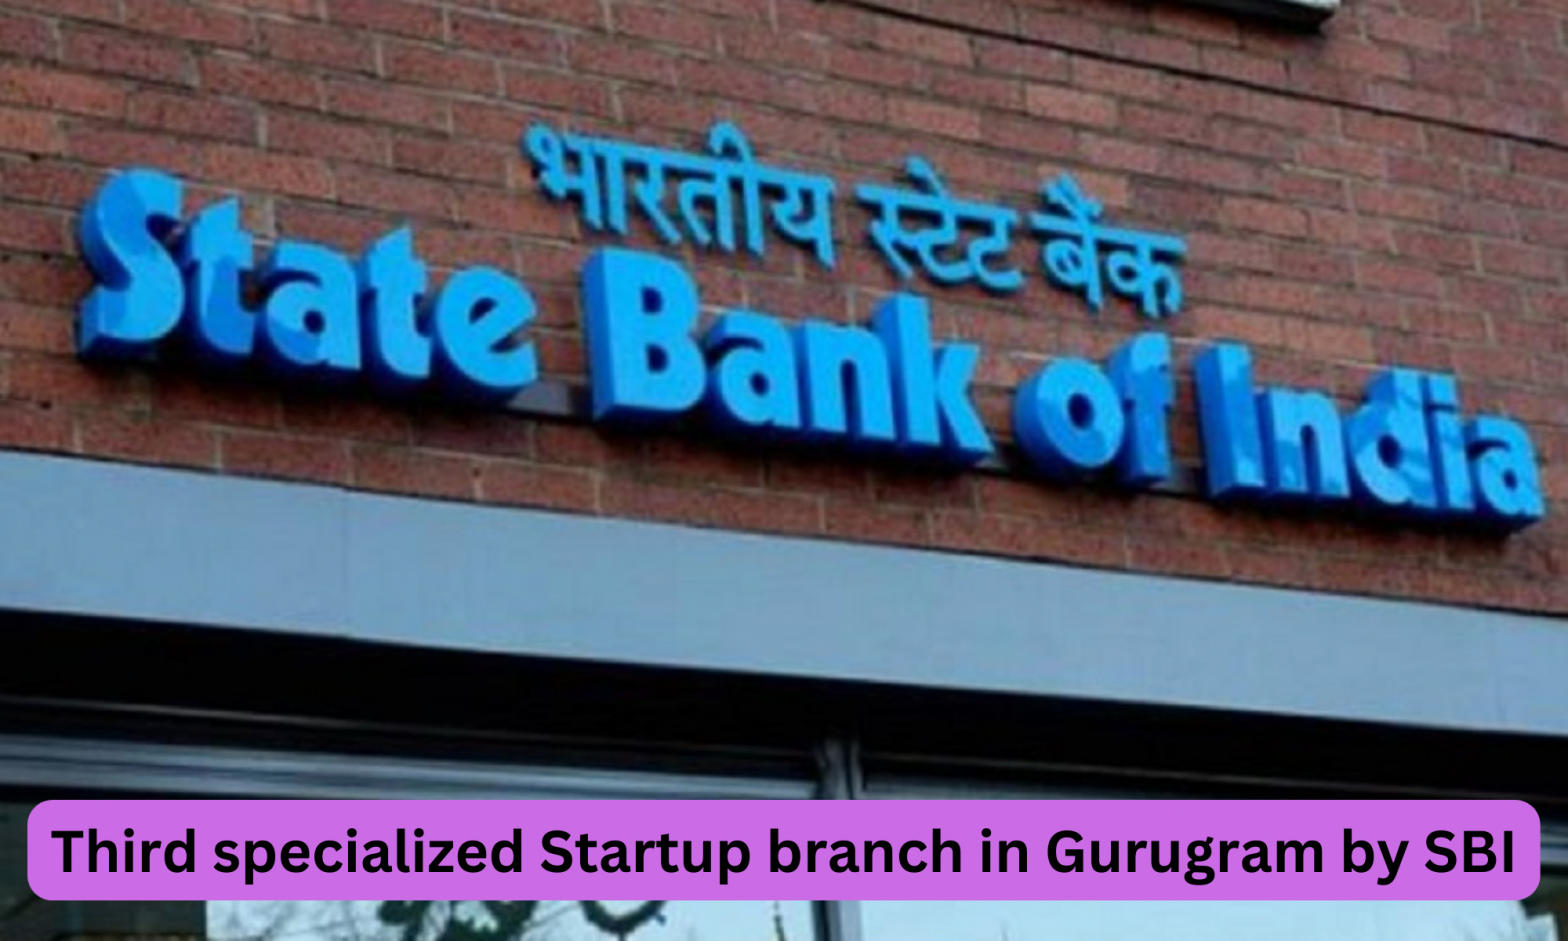 Third specialized Startup branch in Gurugram by SBI